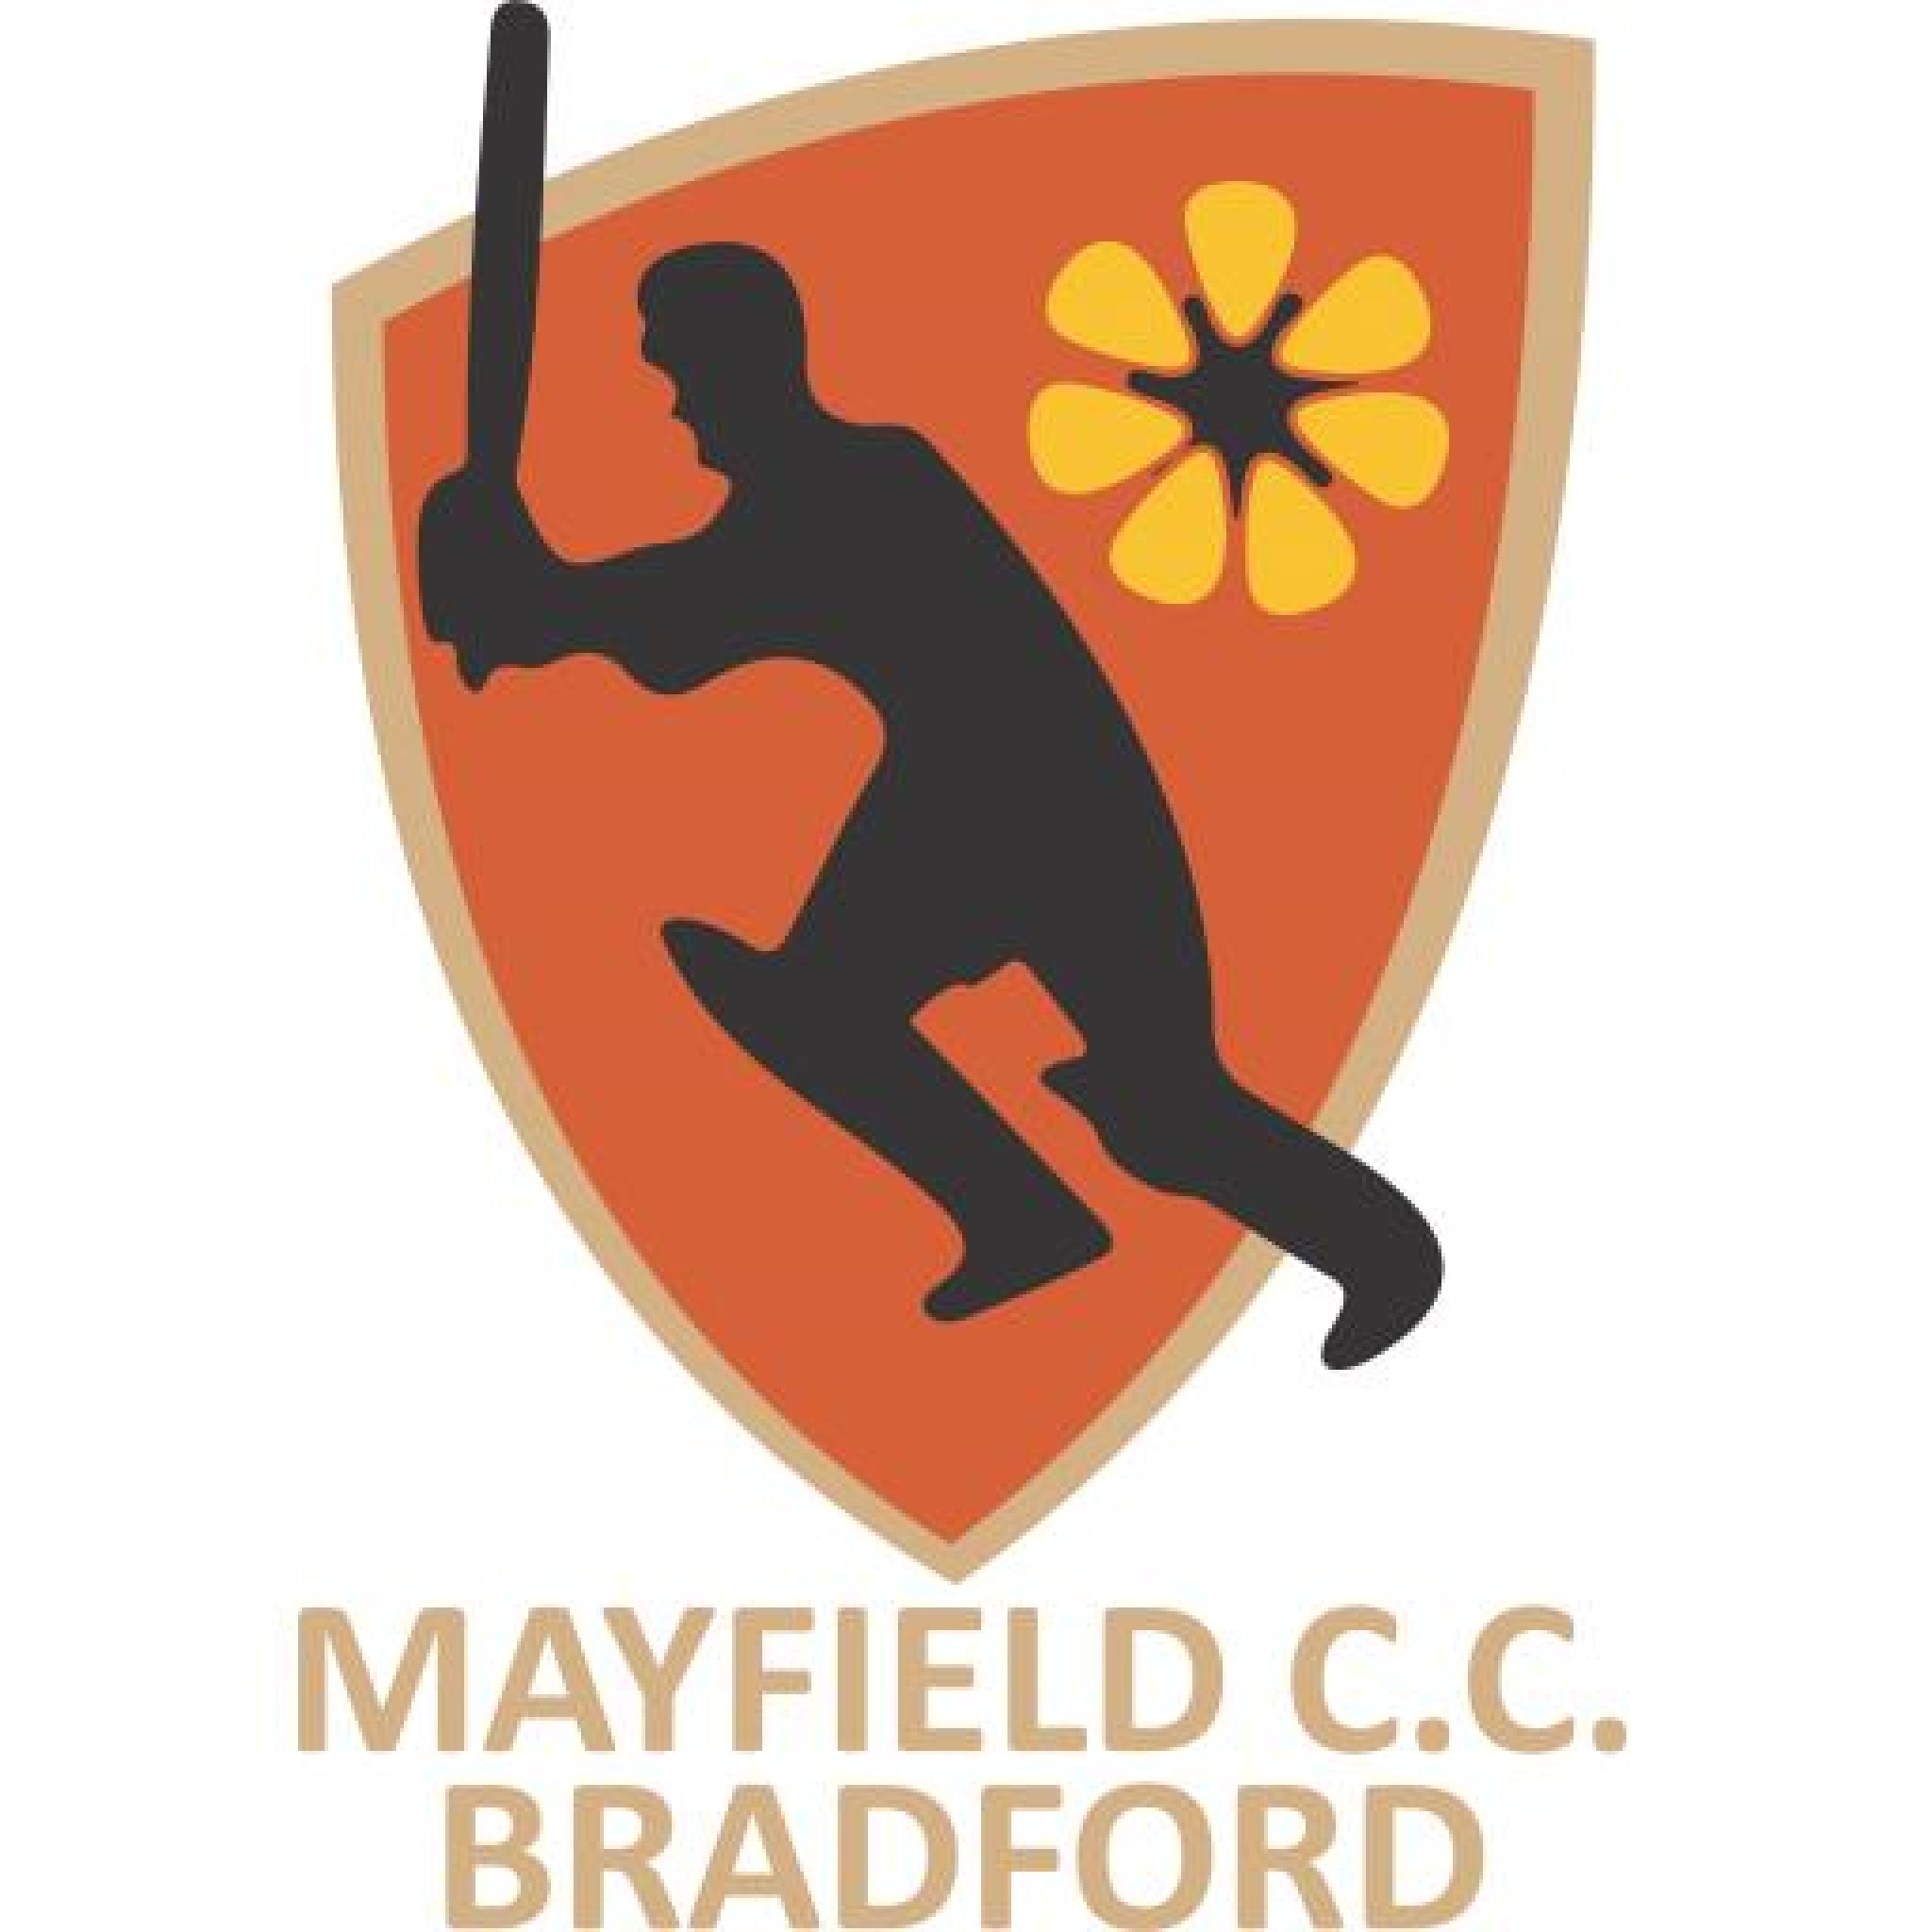 Mayfield CC Bradford .jpg